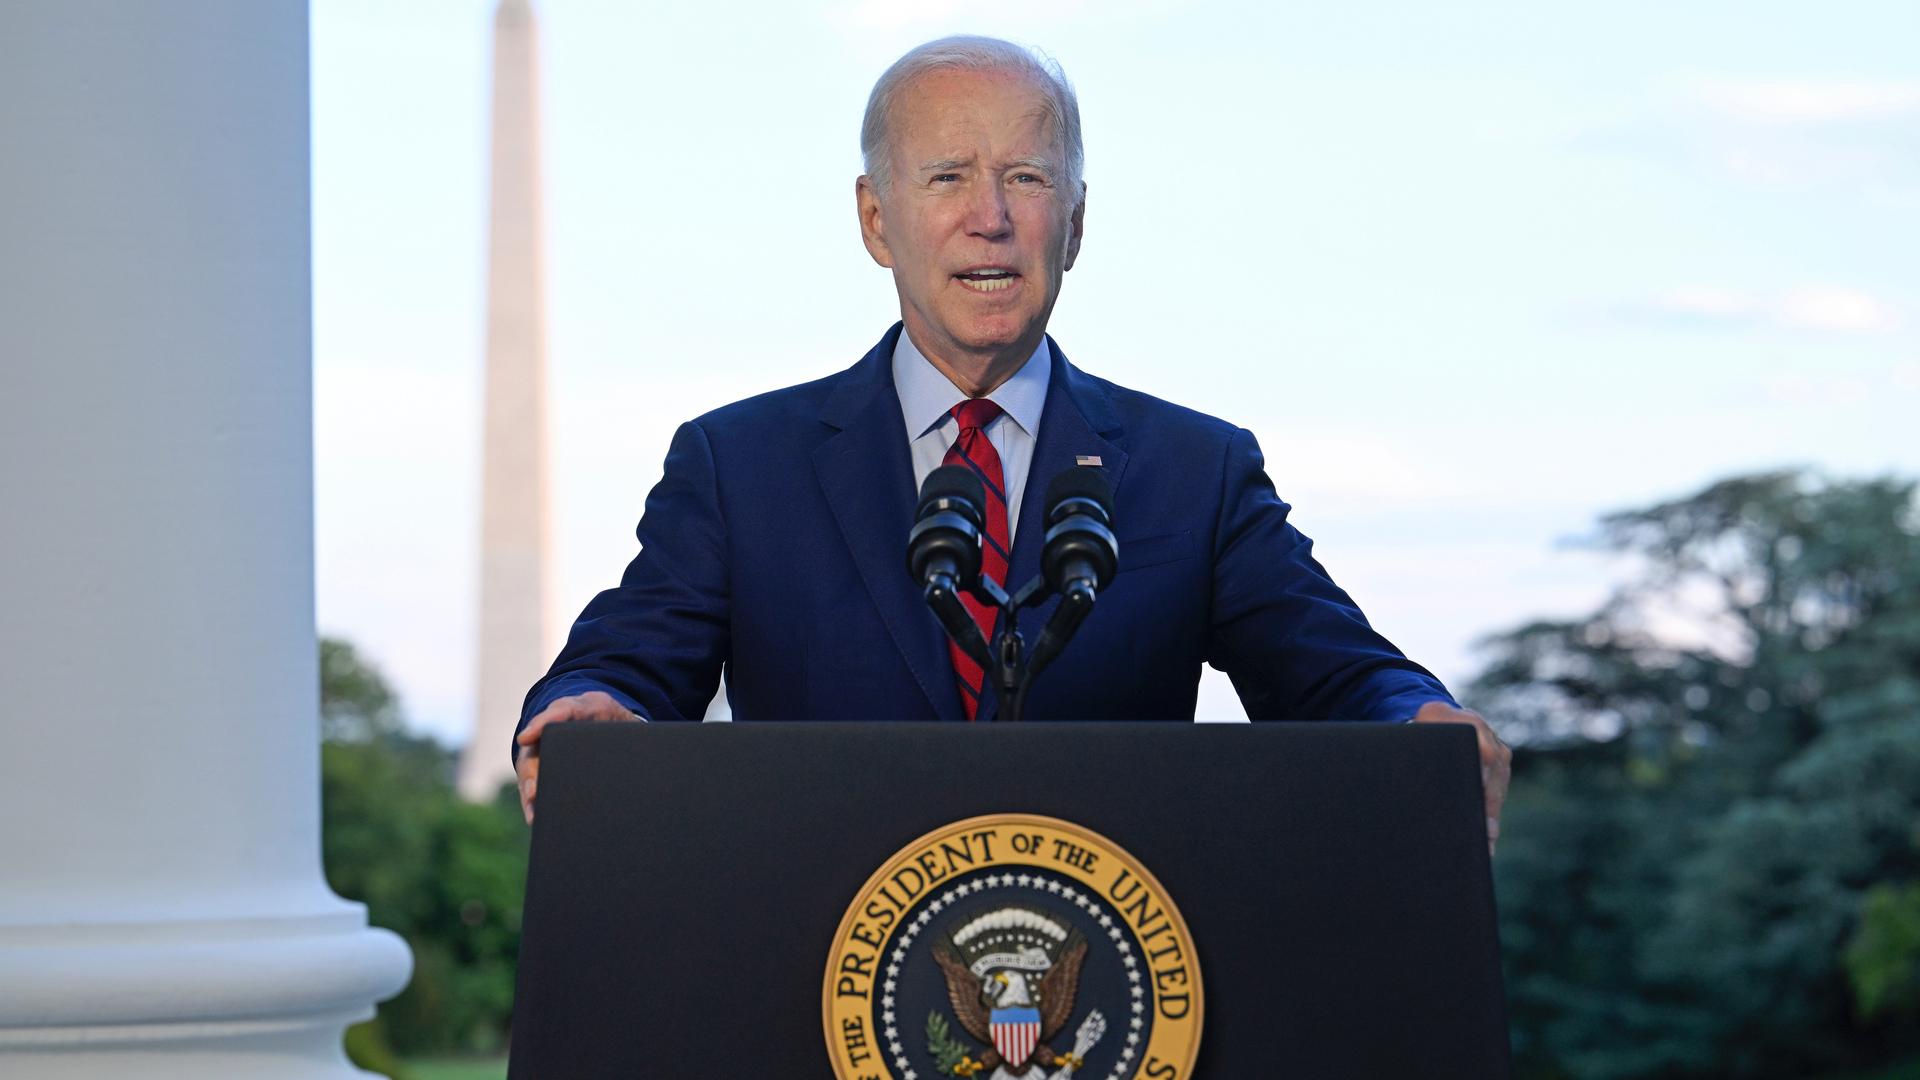 Biden at a podium